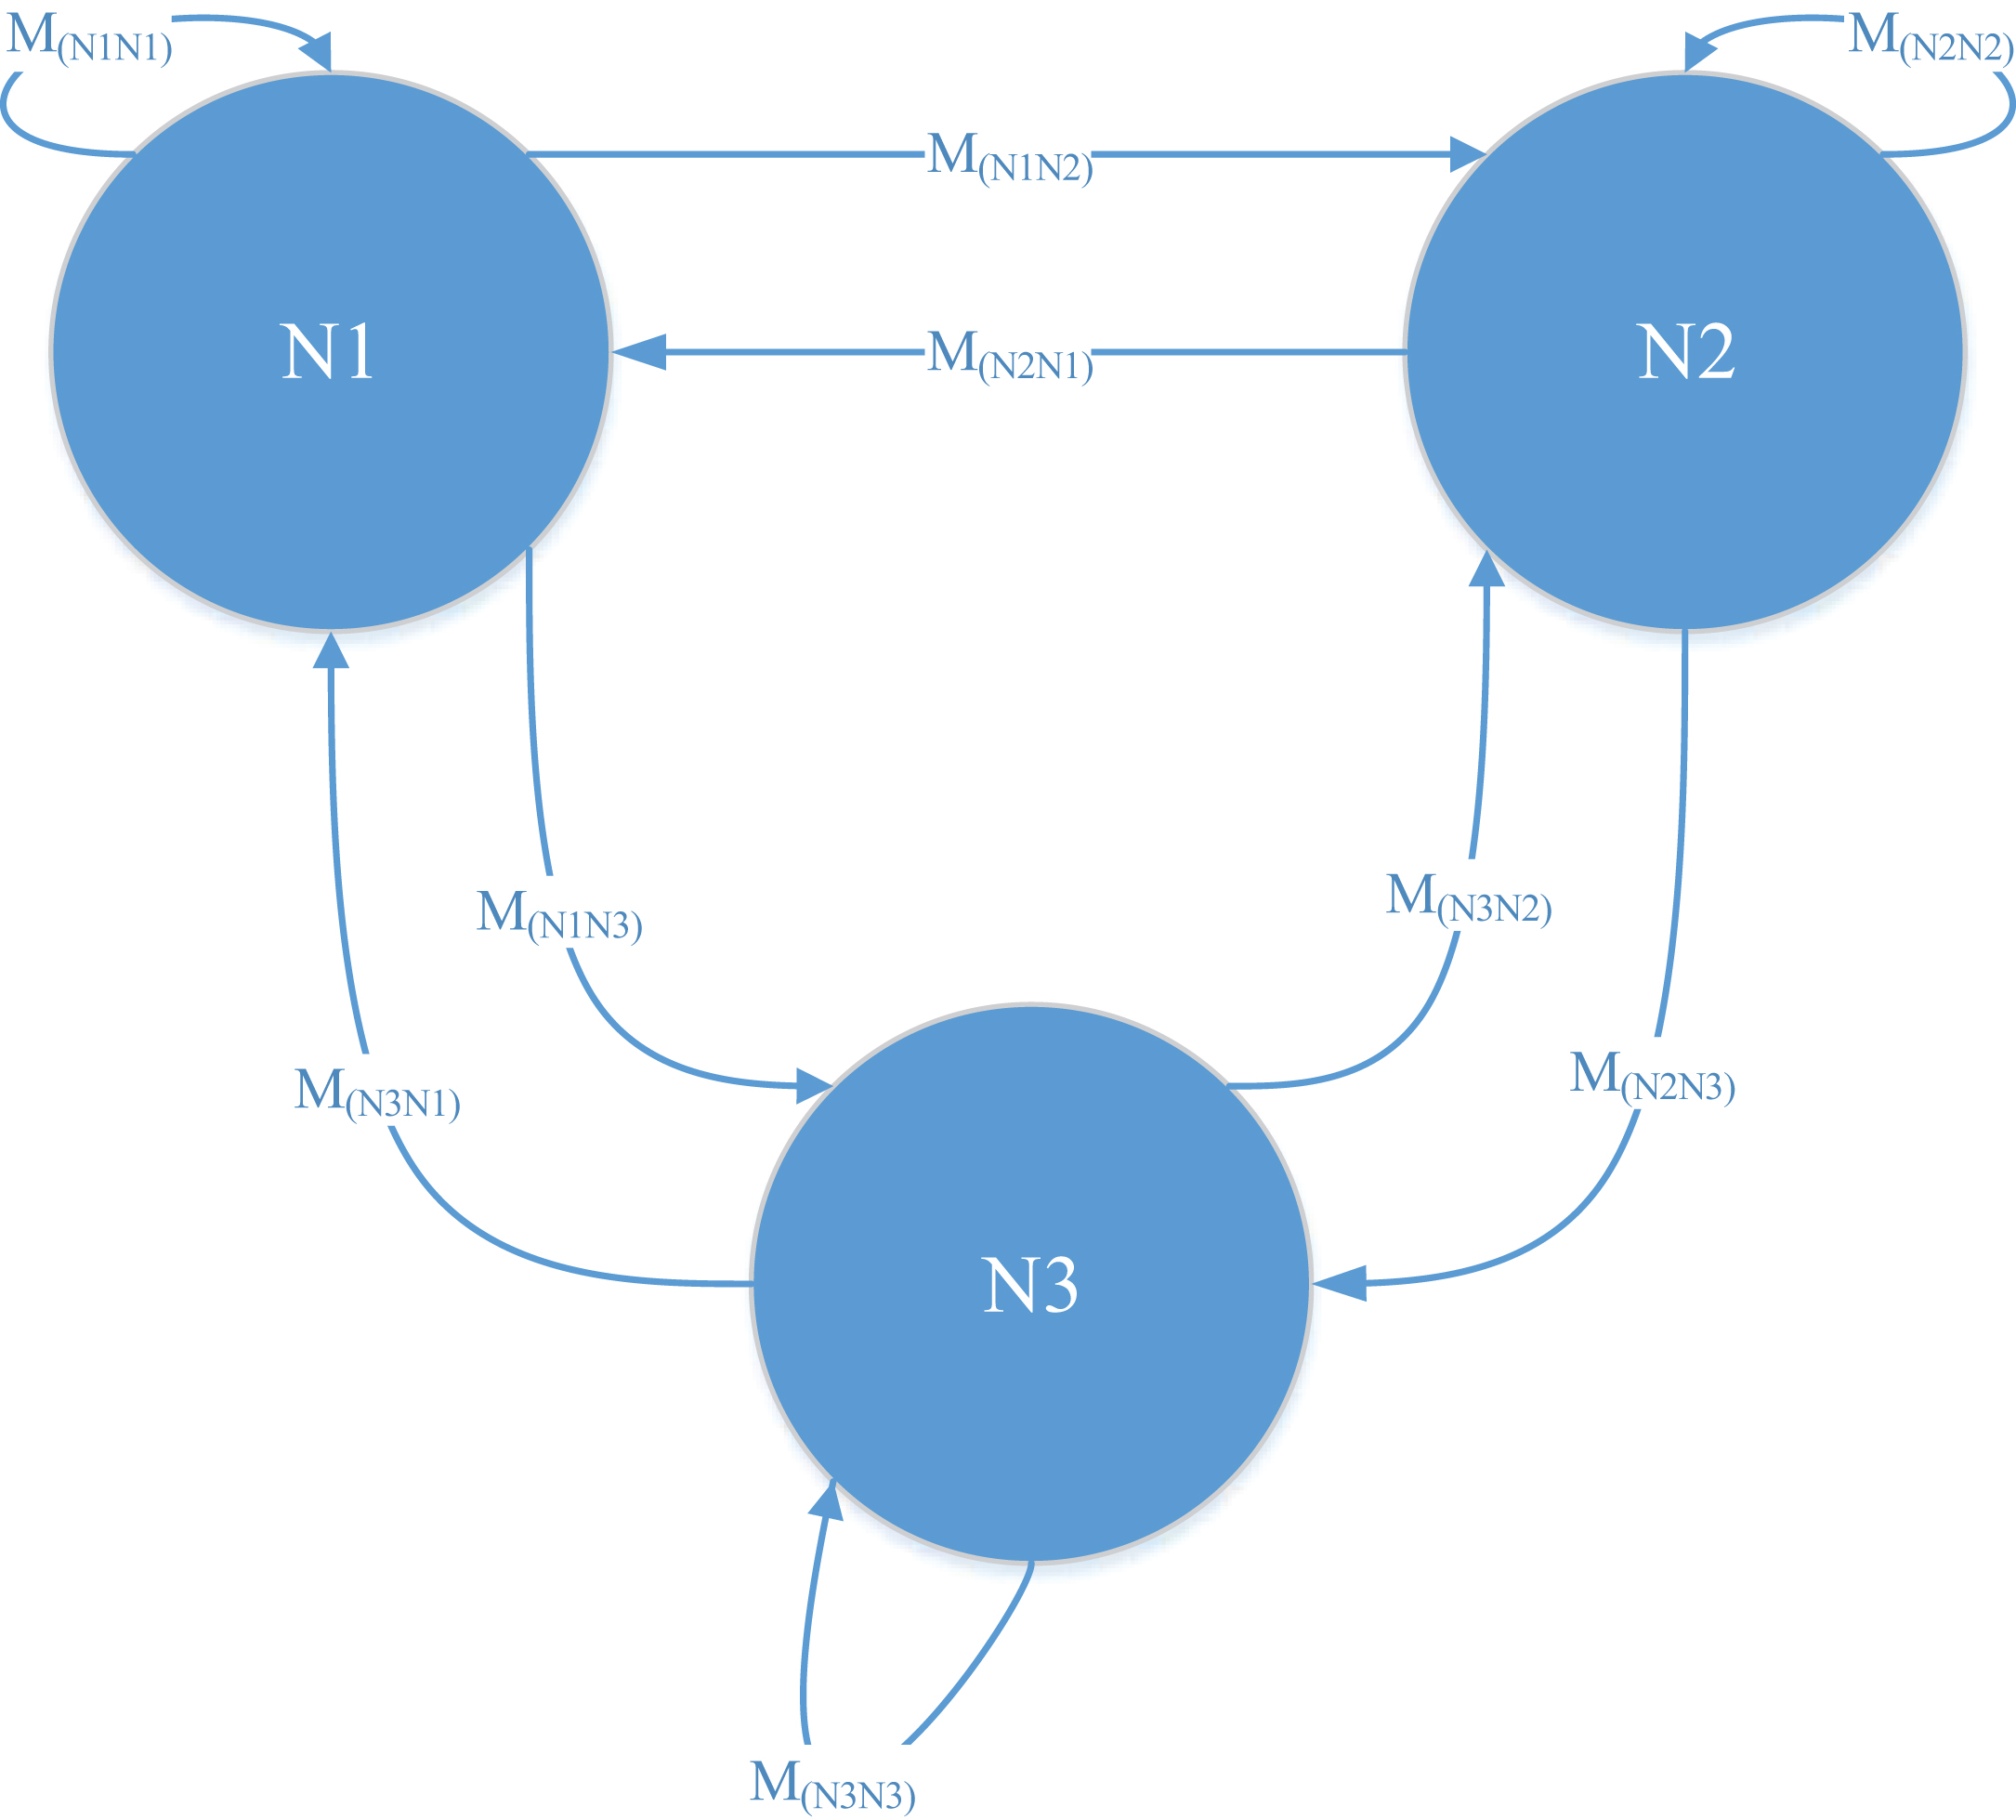 Node-state transition diagram.